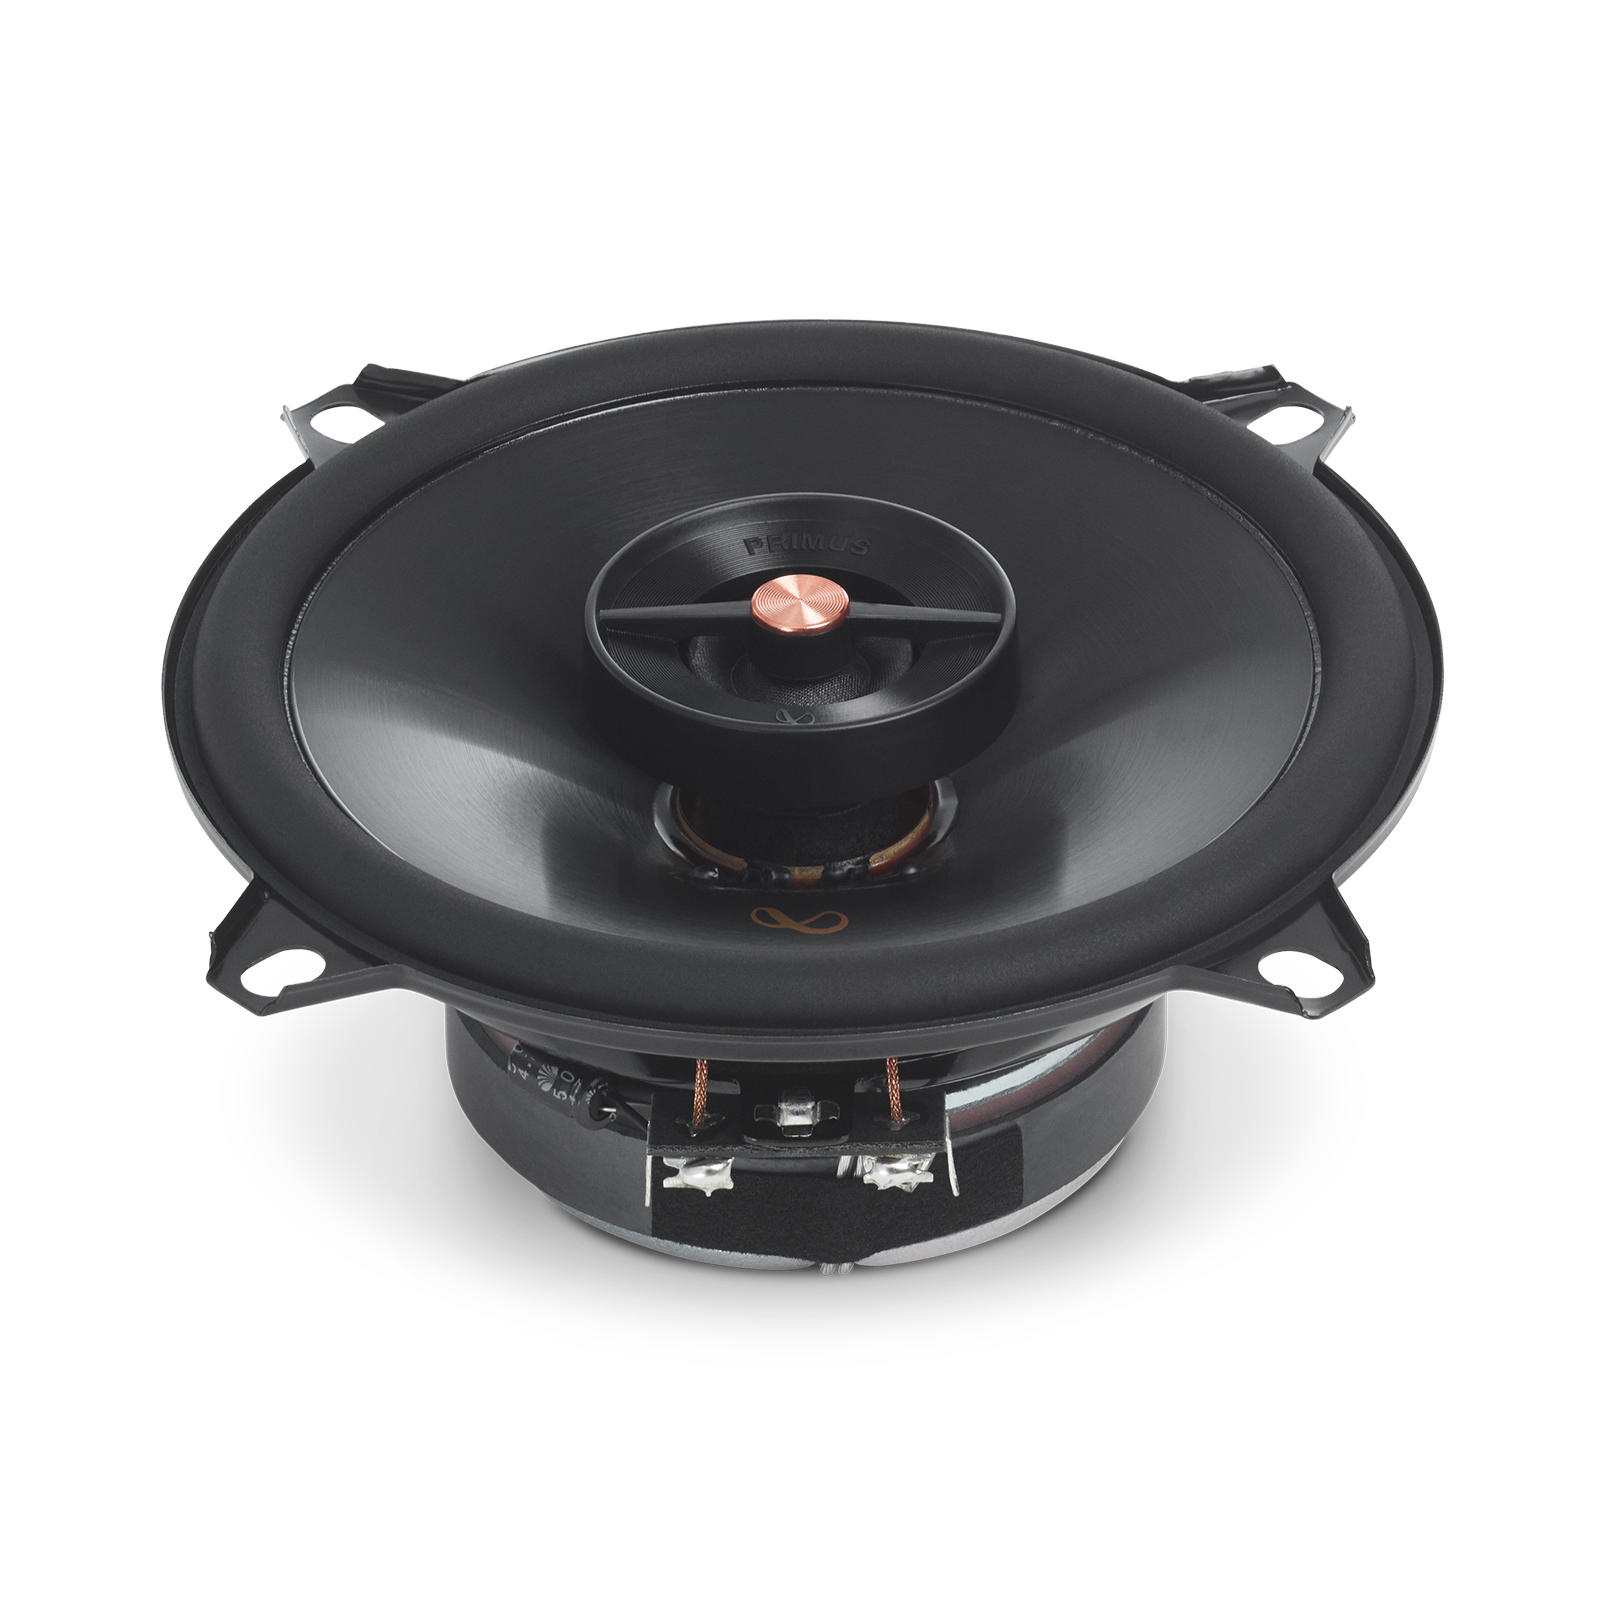 Infinity Primus PR5012is - Black - 5-1/4" (130mm) two-way multielement speaker - Hero